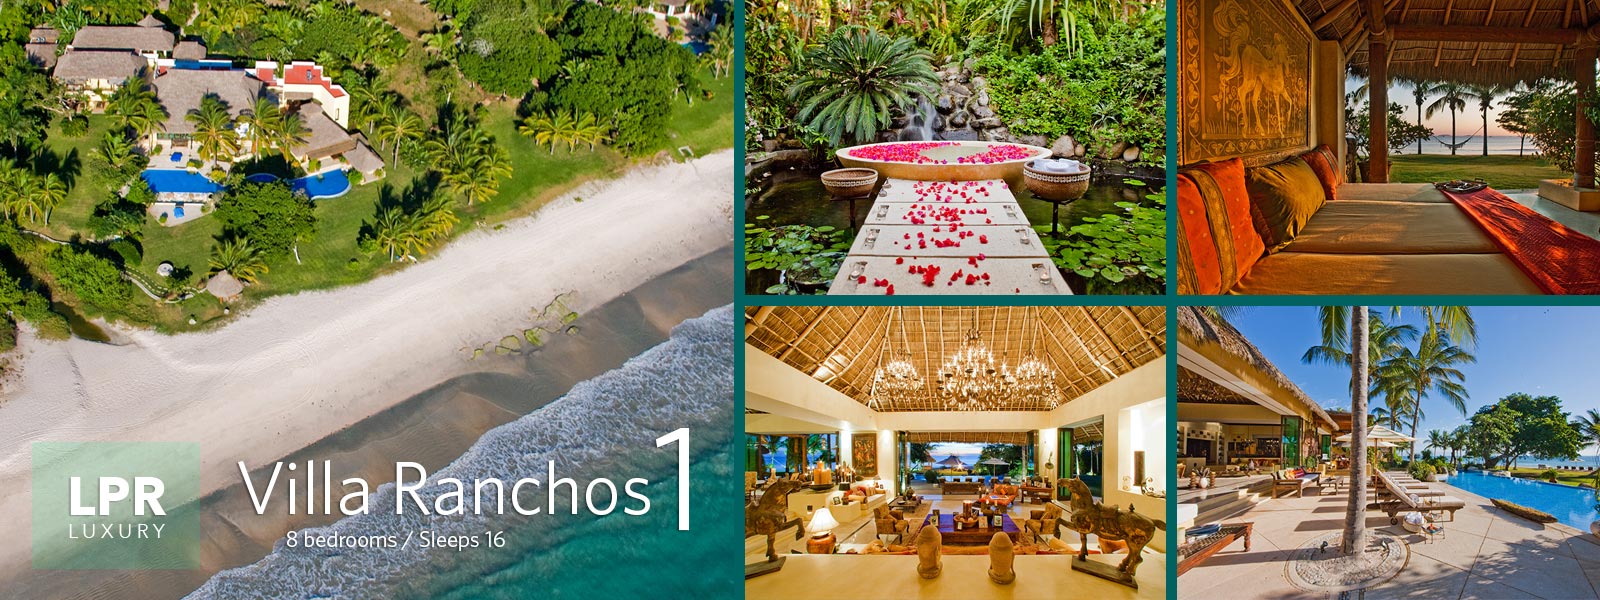 Villa Ranchos 1 - Ultra luxury villa for sale and rent at the Punta Mita Resort - Puerto Vallarta luxury real estate